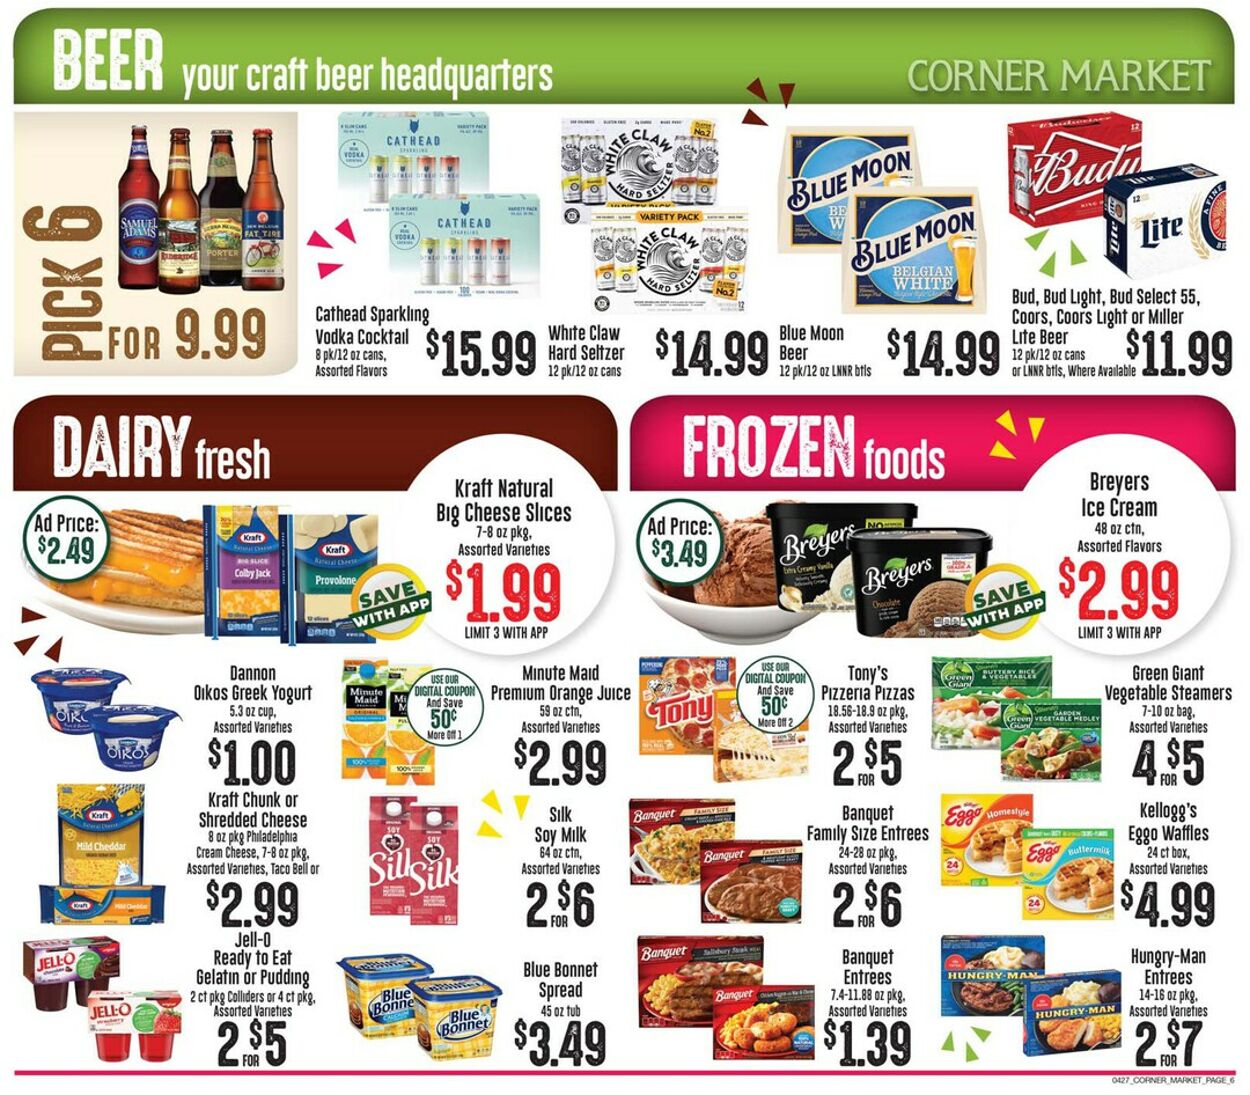 Weekly ad Corner Market 04/27/2022 - 05/03/2022